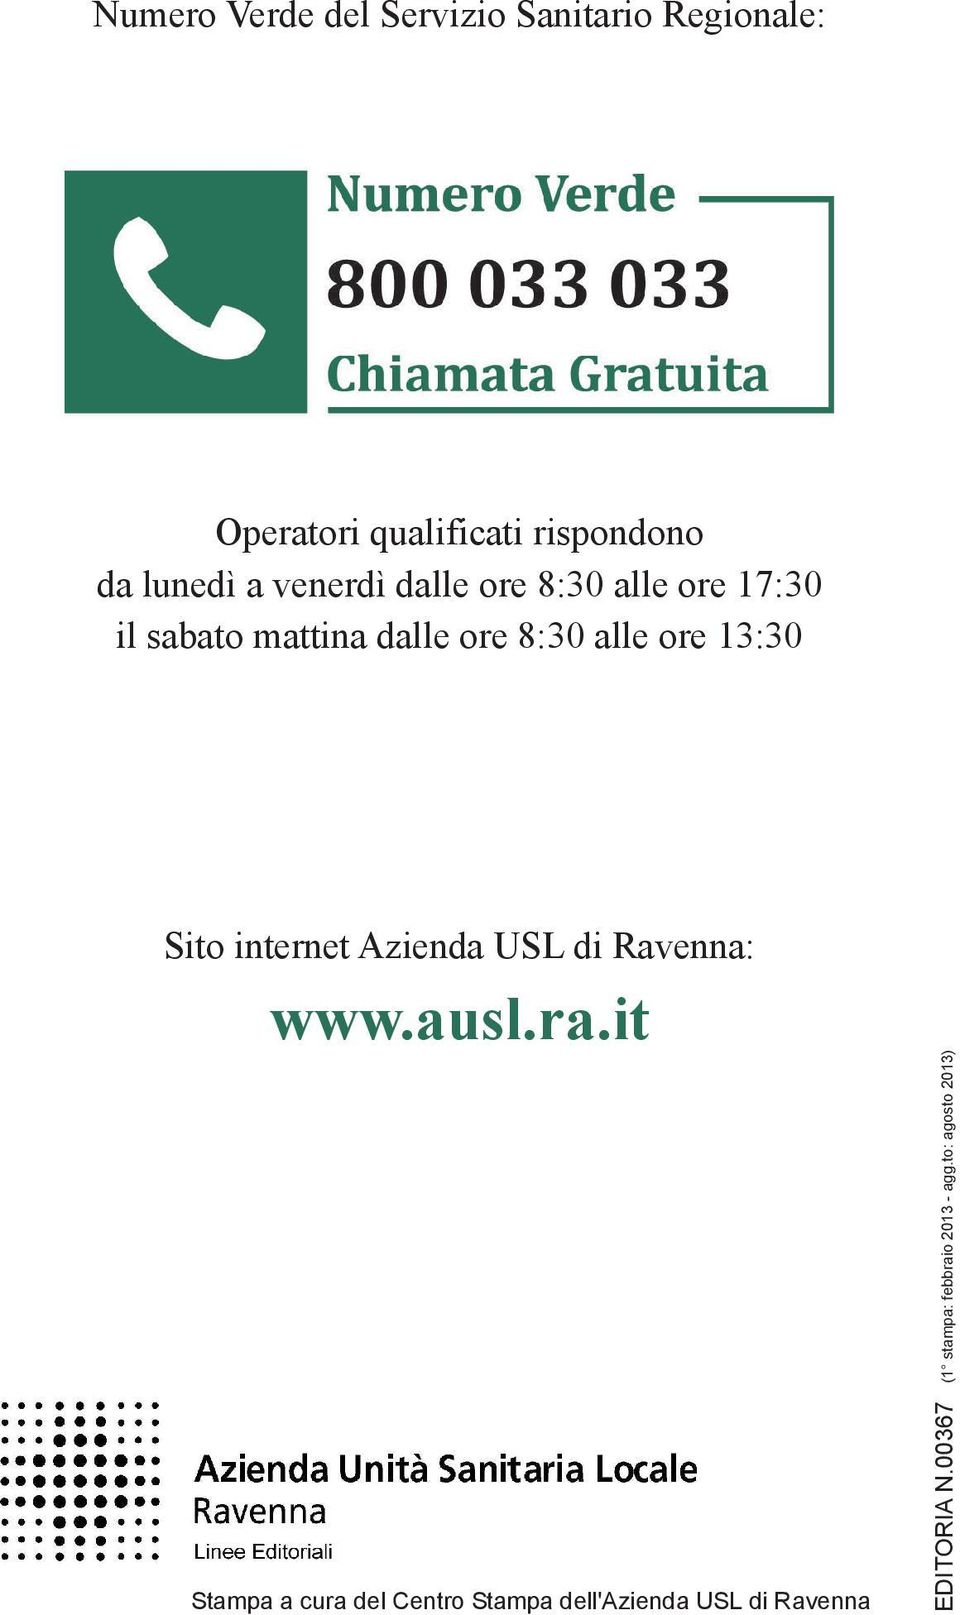 13:30 Sito internet Azienda USL di Ravenna: www.ausl.ra.